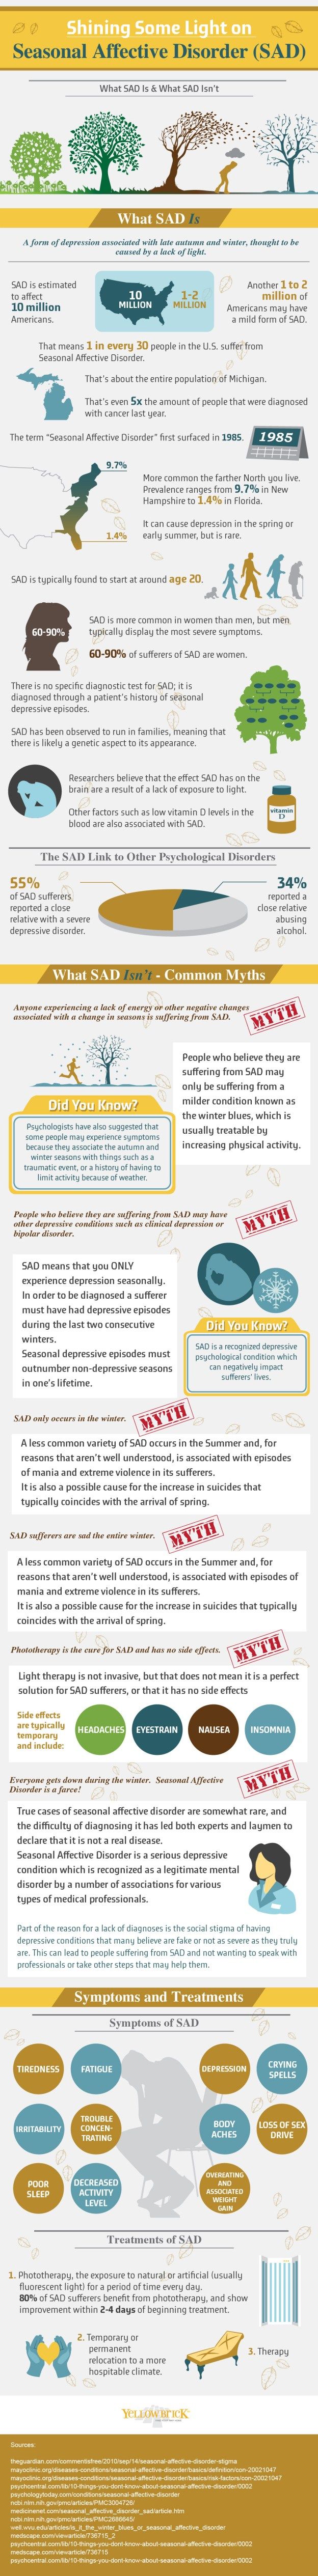 1535306511_121_Psychology-Infographic-Symptoms-and-Myths-of-Seasonal-Affective-Disorder-SAD Psychology Infographic : Symptoms and Myths of Seasonal Affective Disorder (SAD)